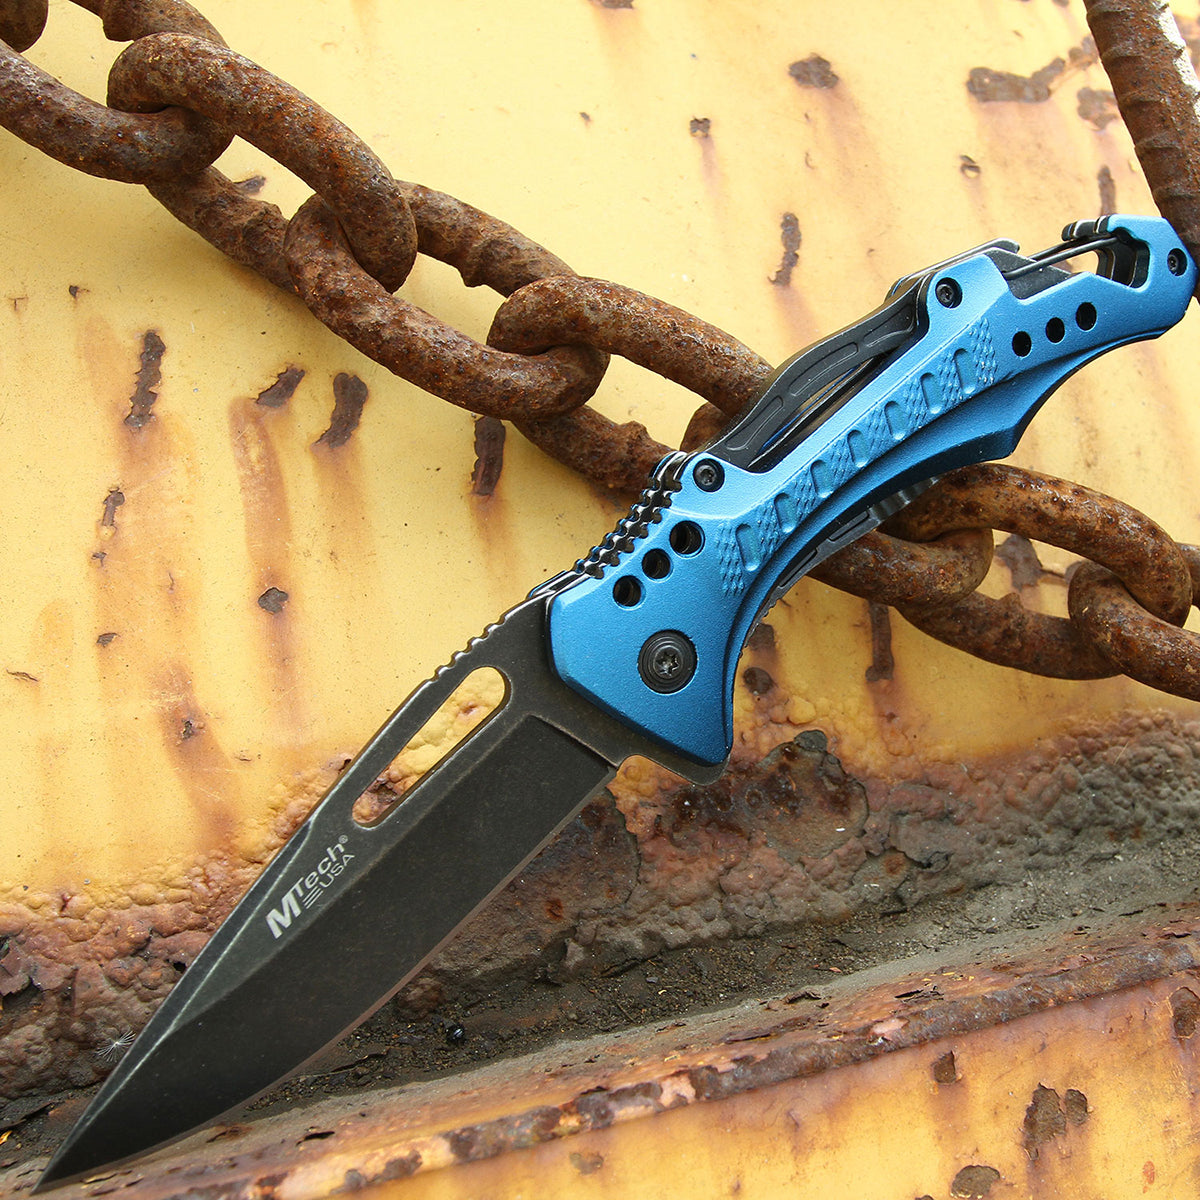 MTech USA Linerlock Spring Assisted Folding Knife, 3.5" Blue Blade, MT-A705G2-BL M-Tech